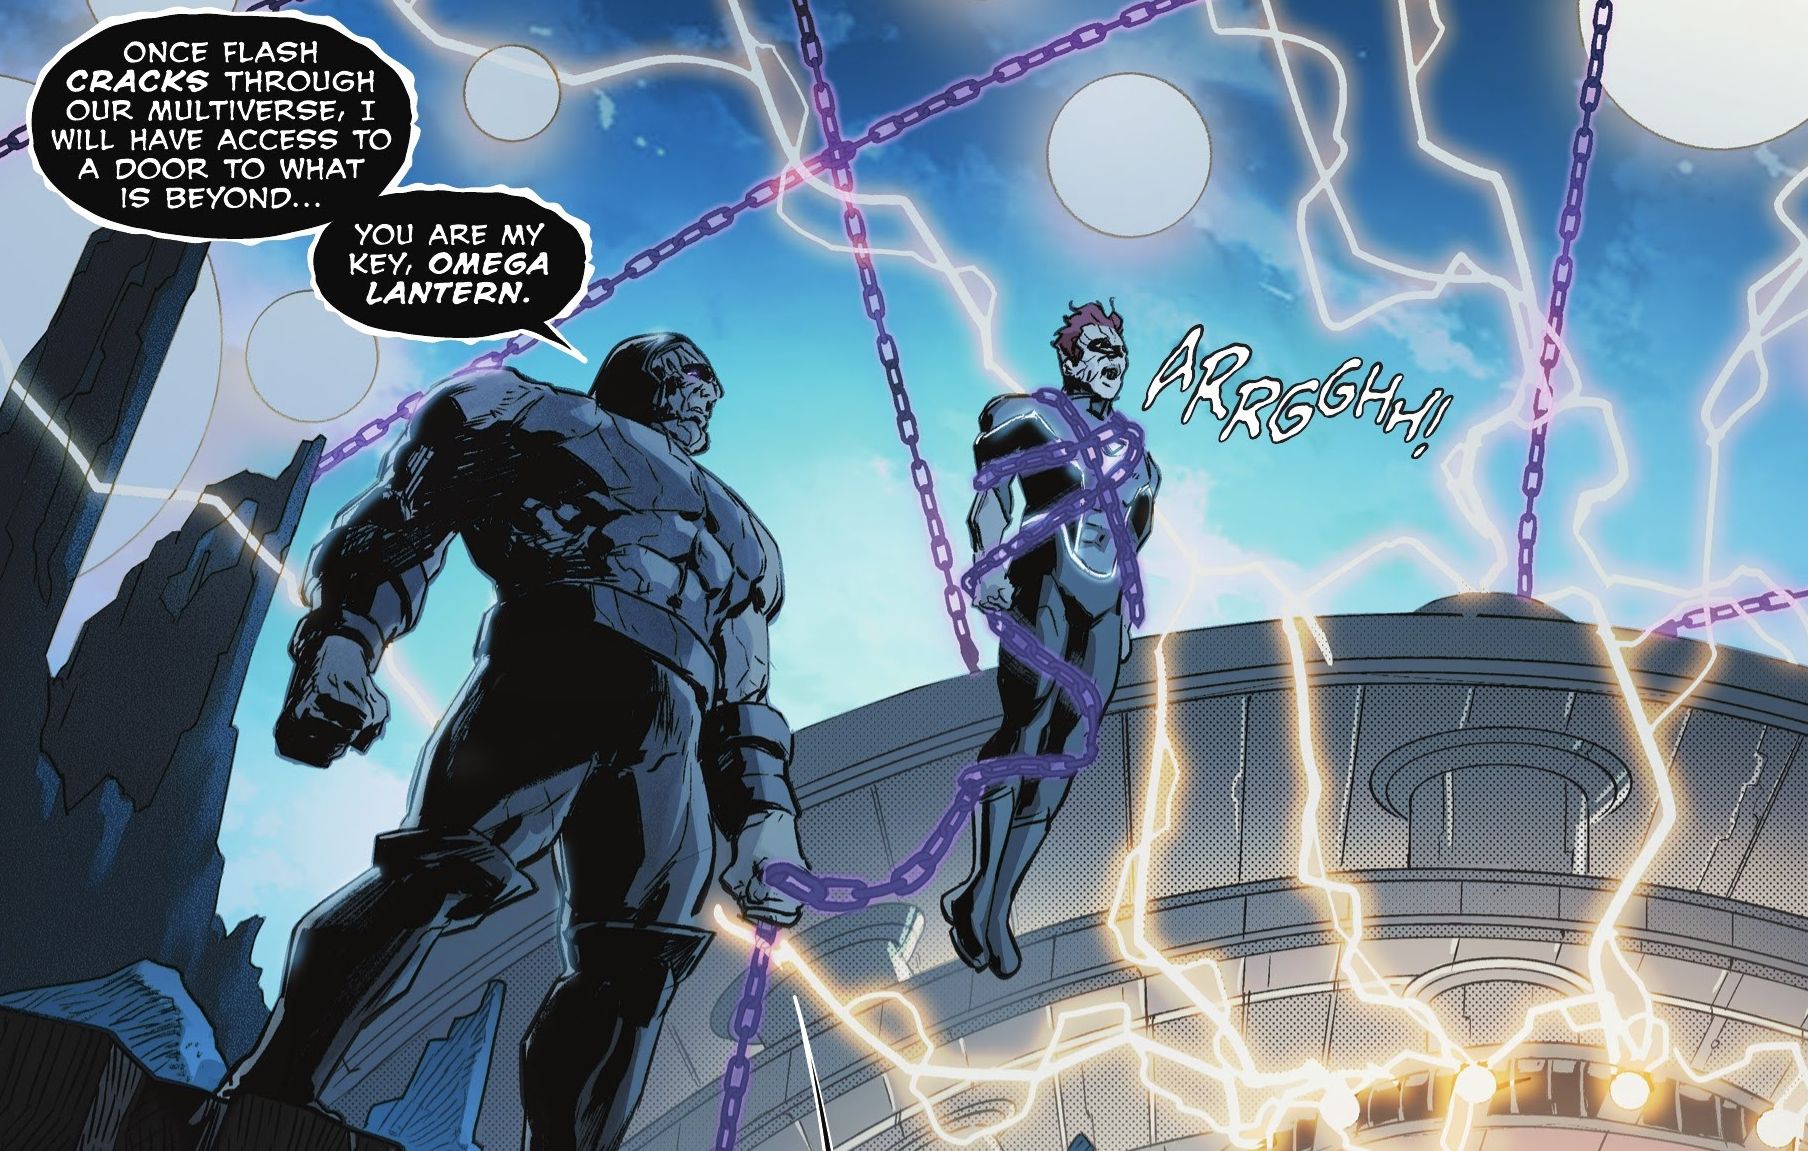 Darkseid uses Roy Harper as his Omega Lantern